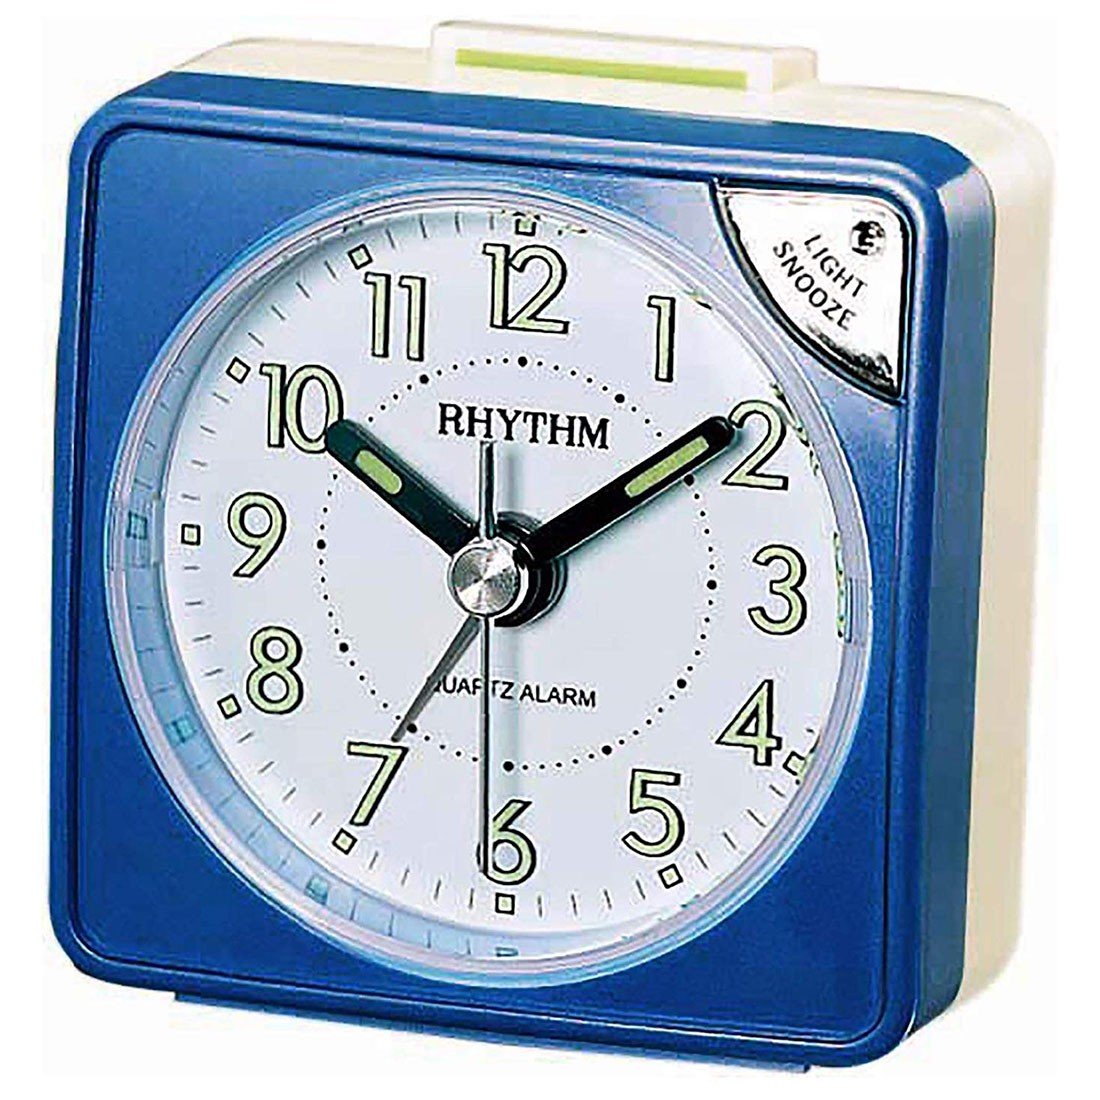 Rhythm Alarm Clock,With 4 Steps Beep Sound,Snooze,Light, CRE211NR04